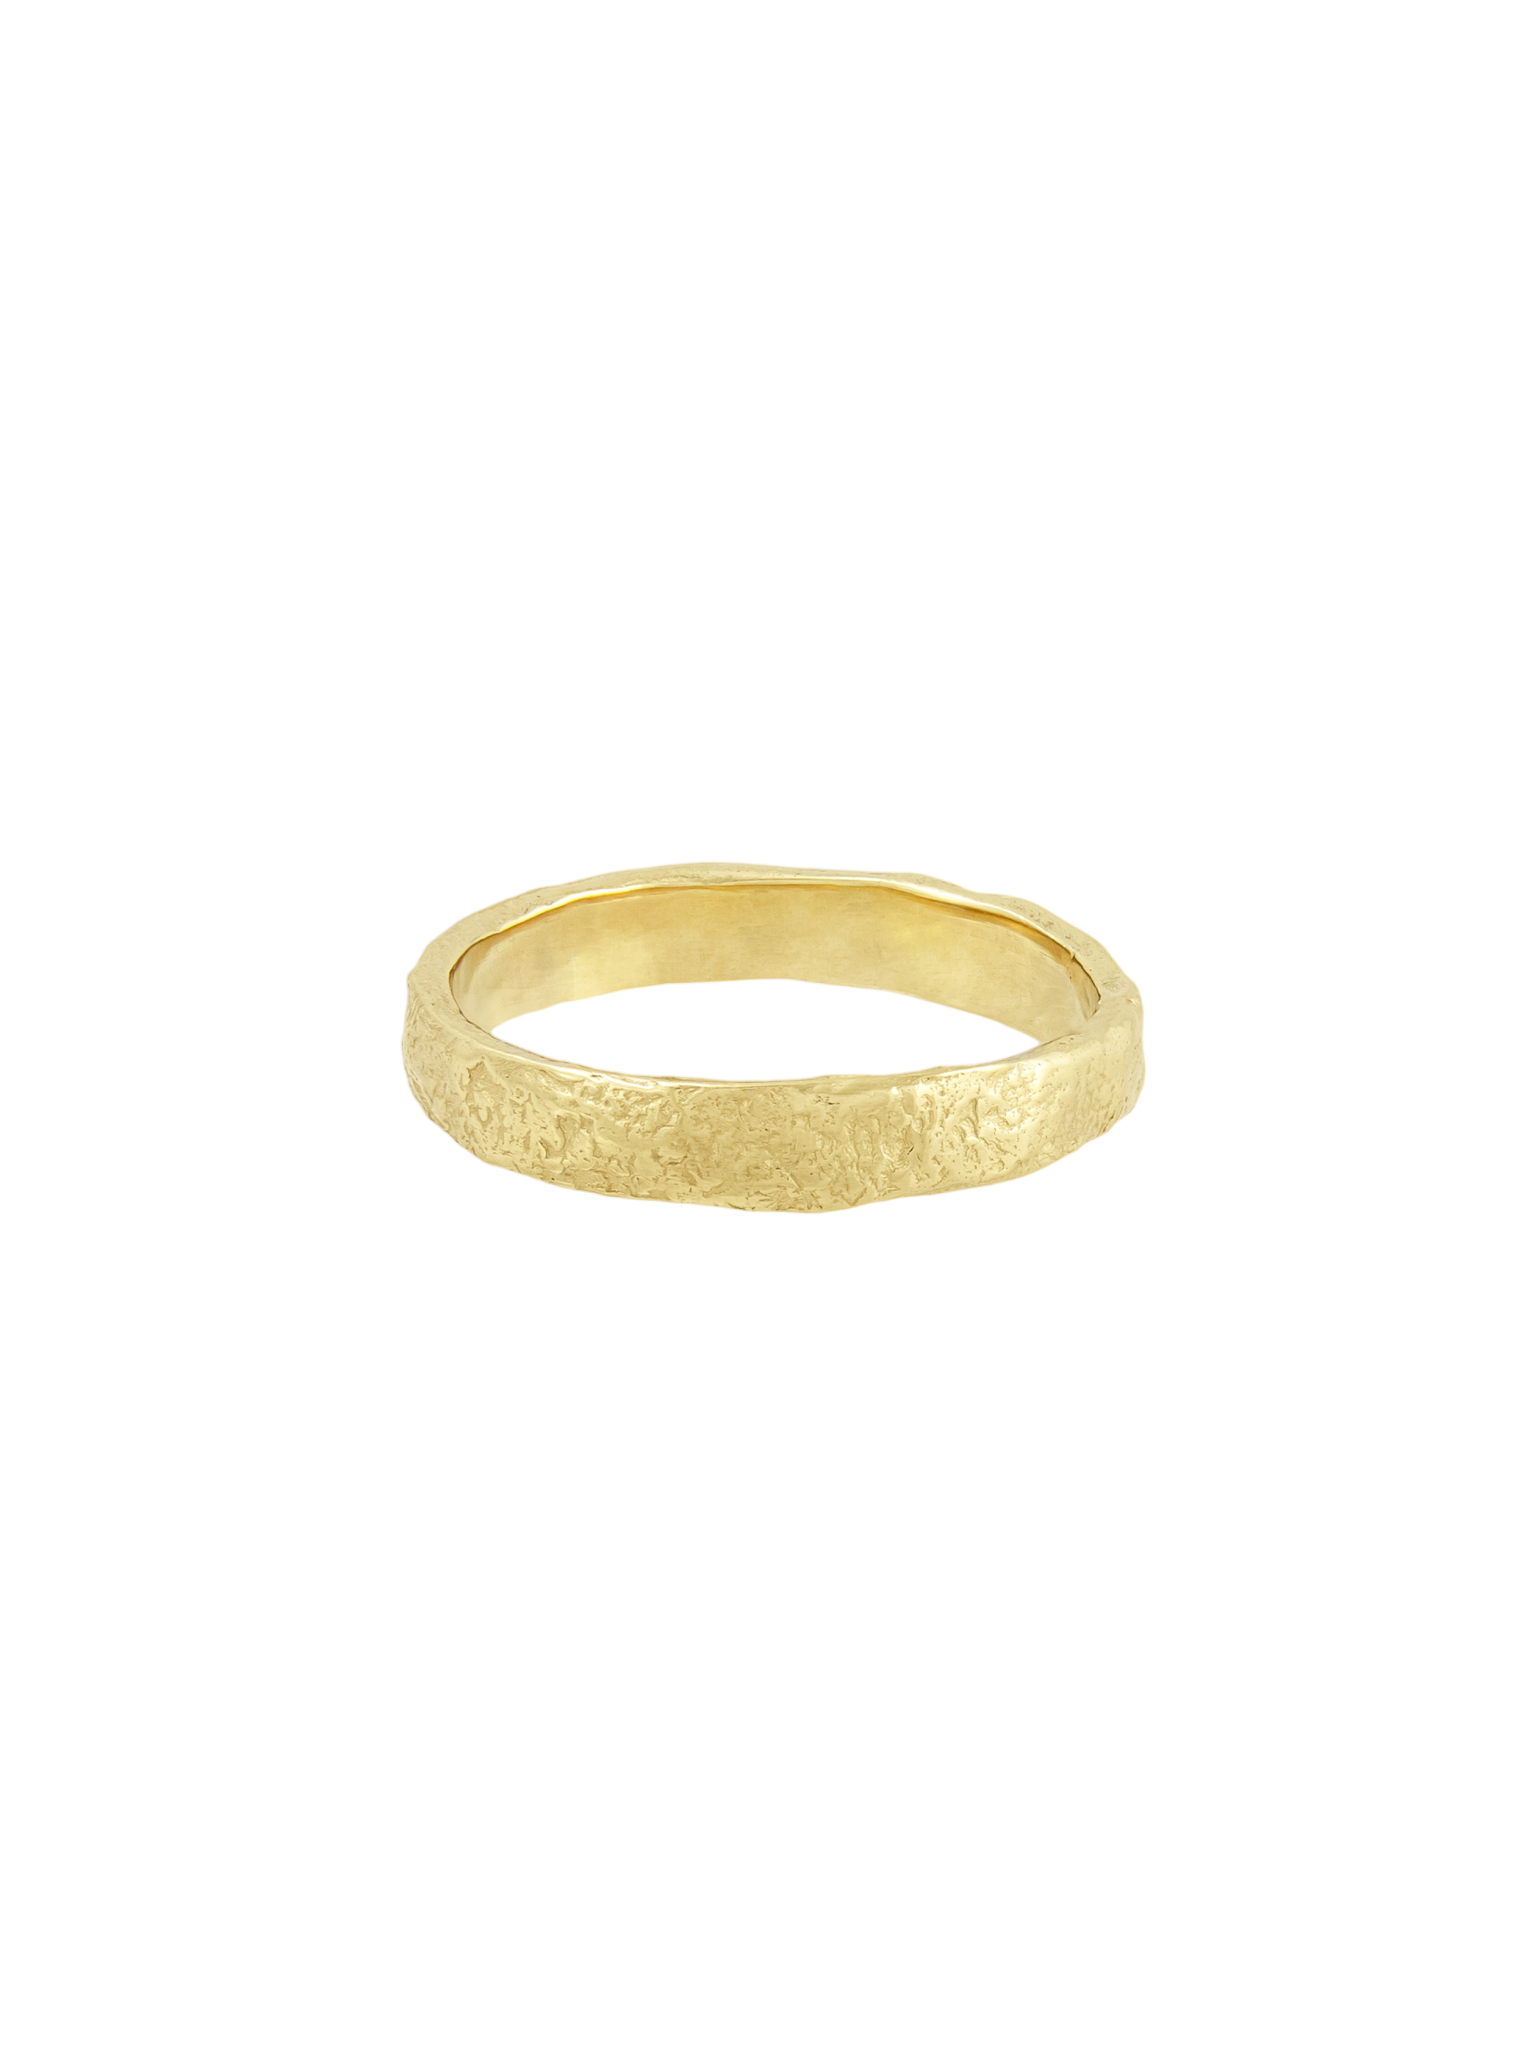 3.5mm organic textured wedding ring